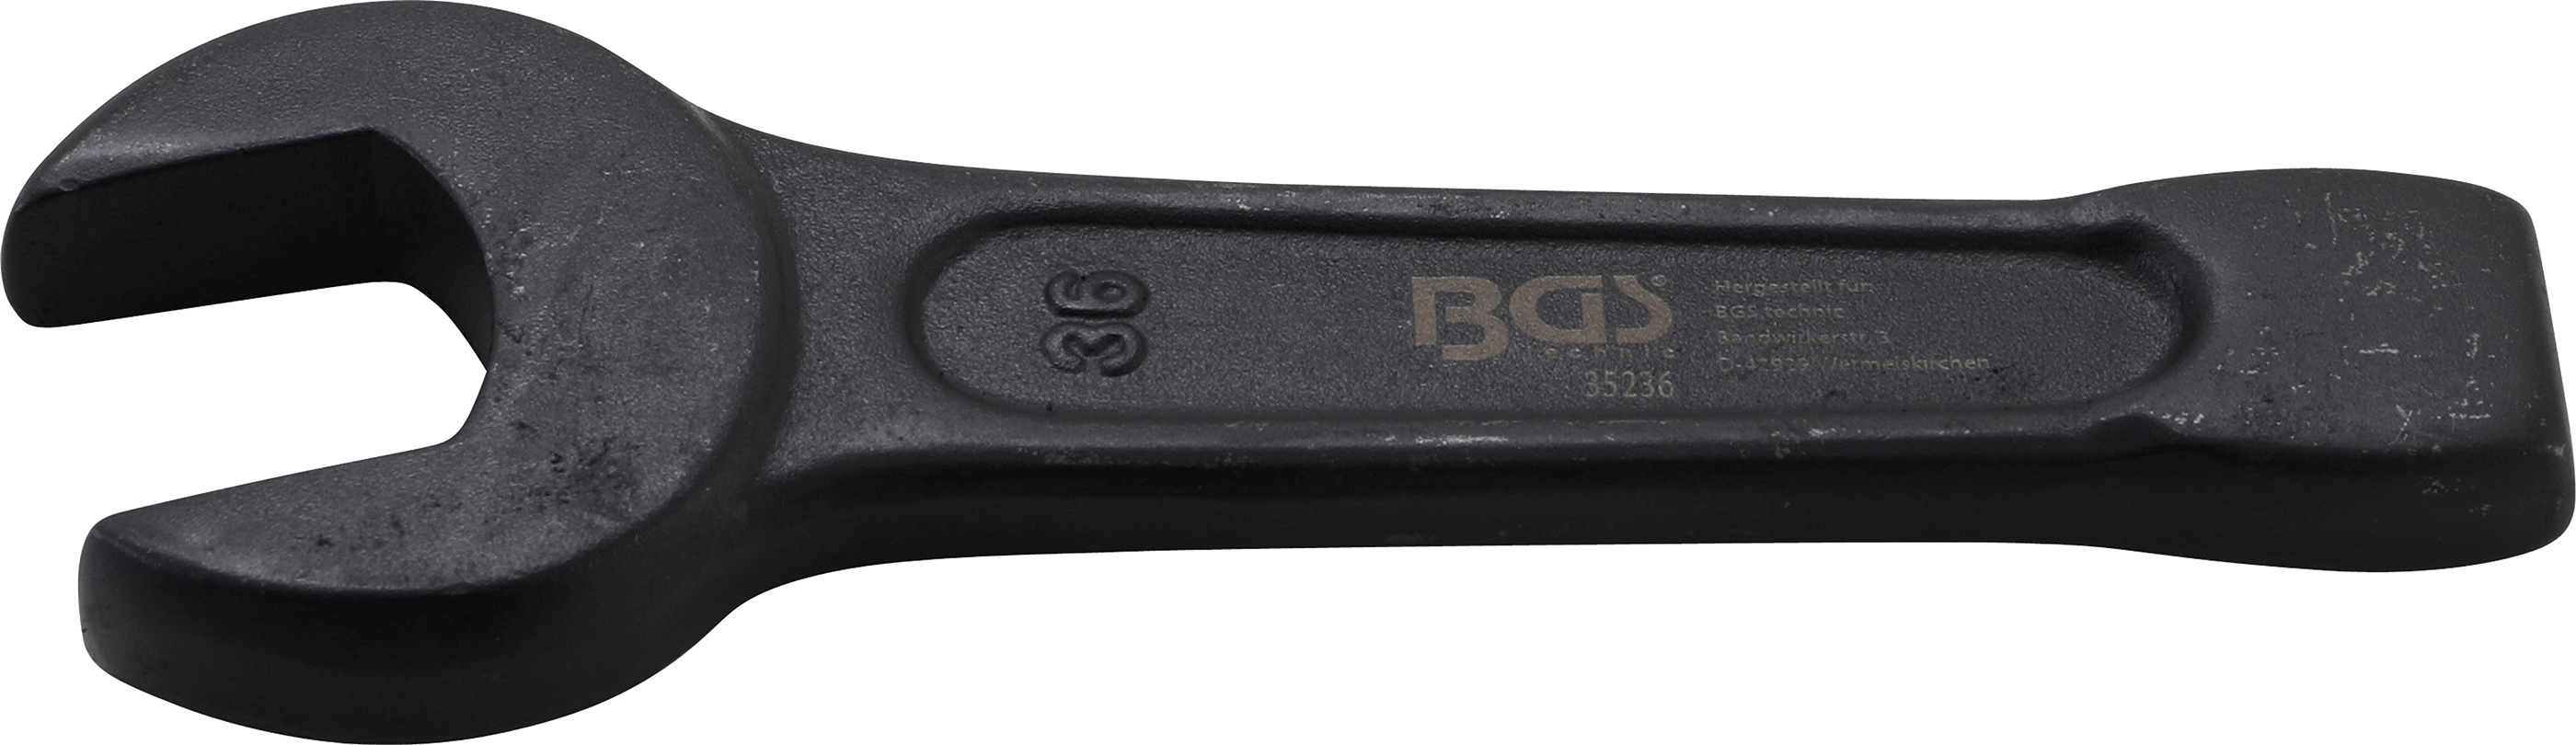 BGS 35236 Cheie fixă cu impact | 36 mm